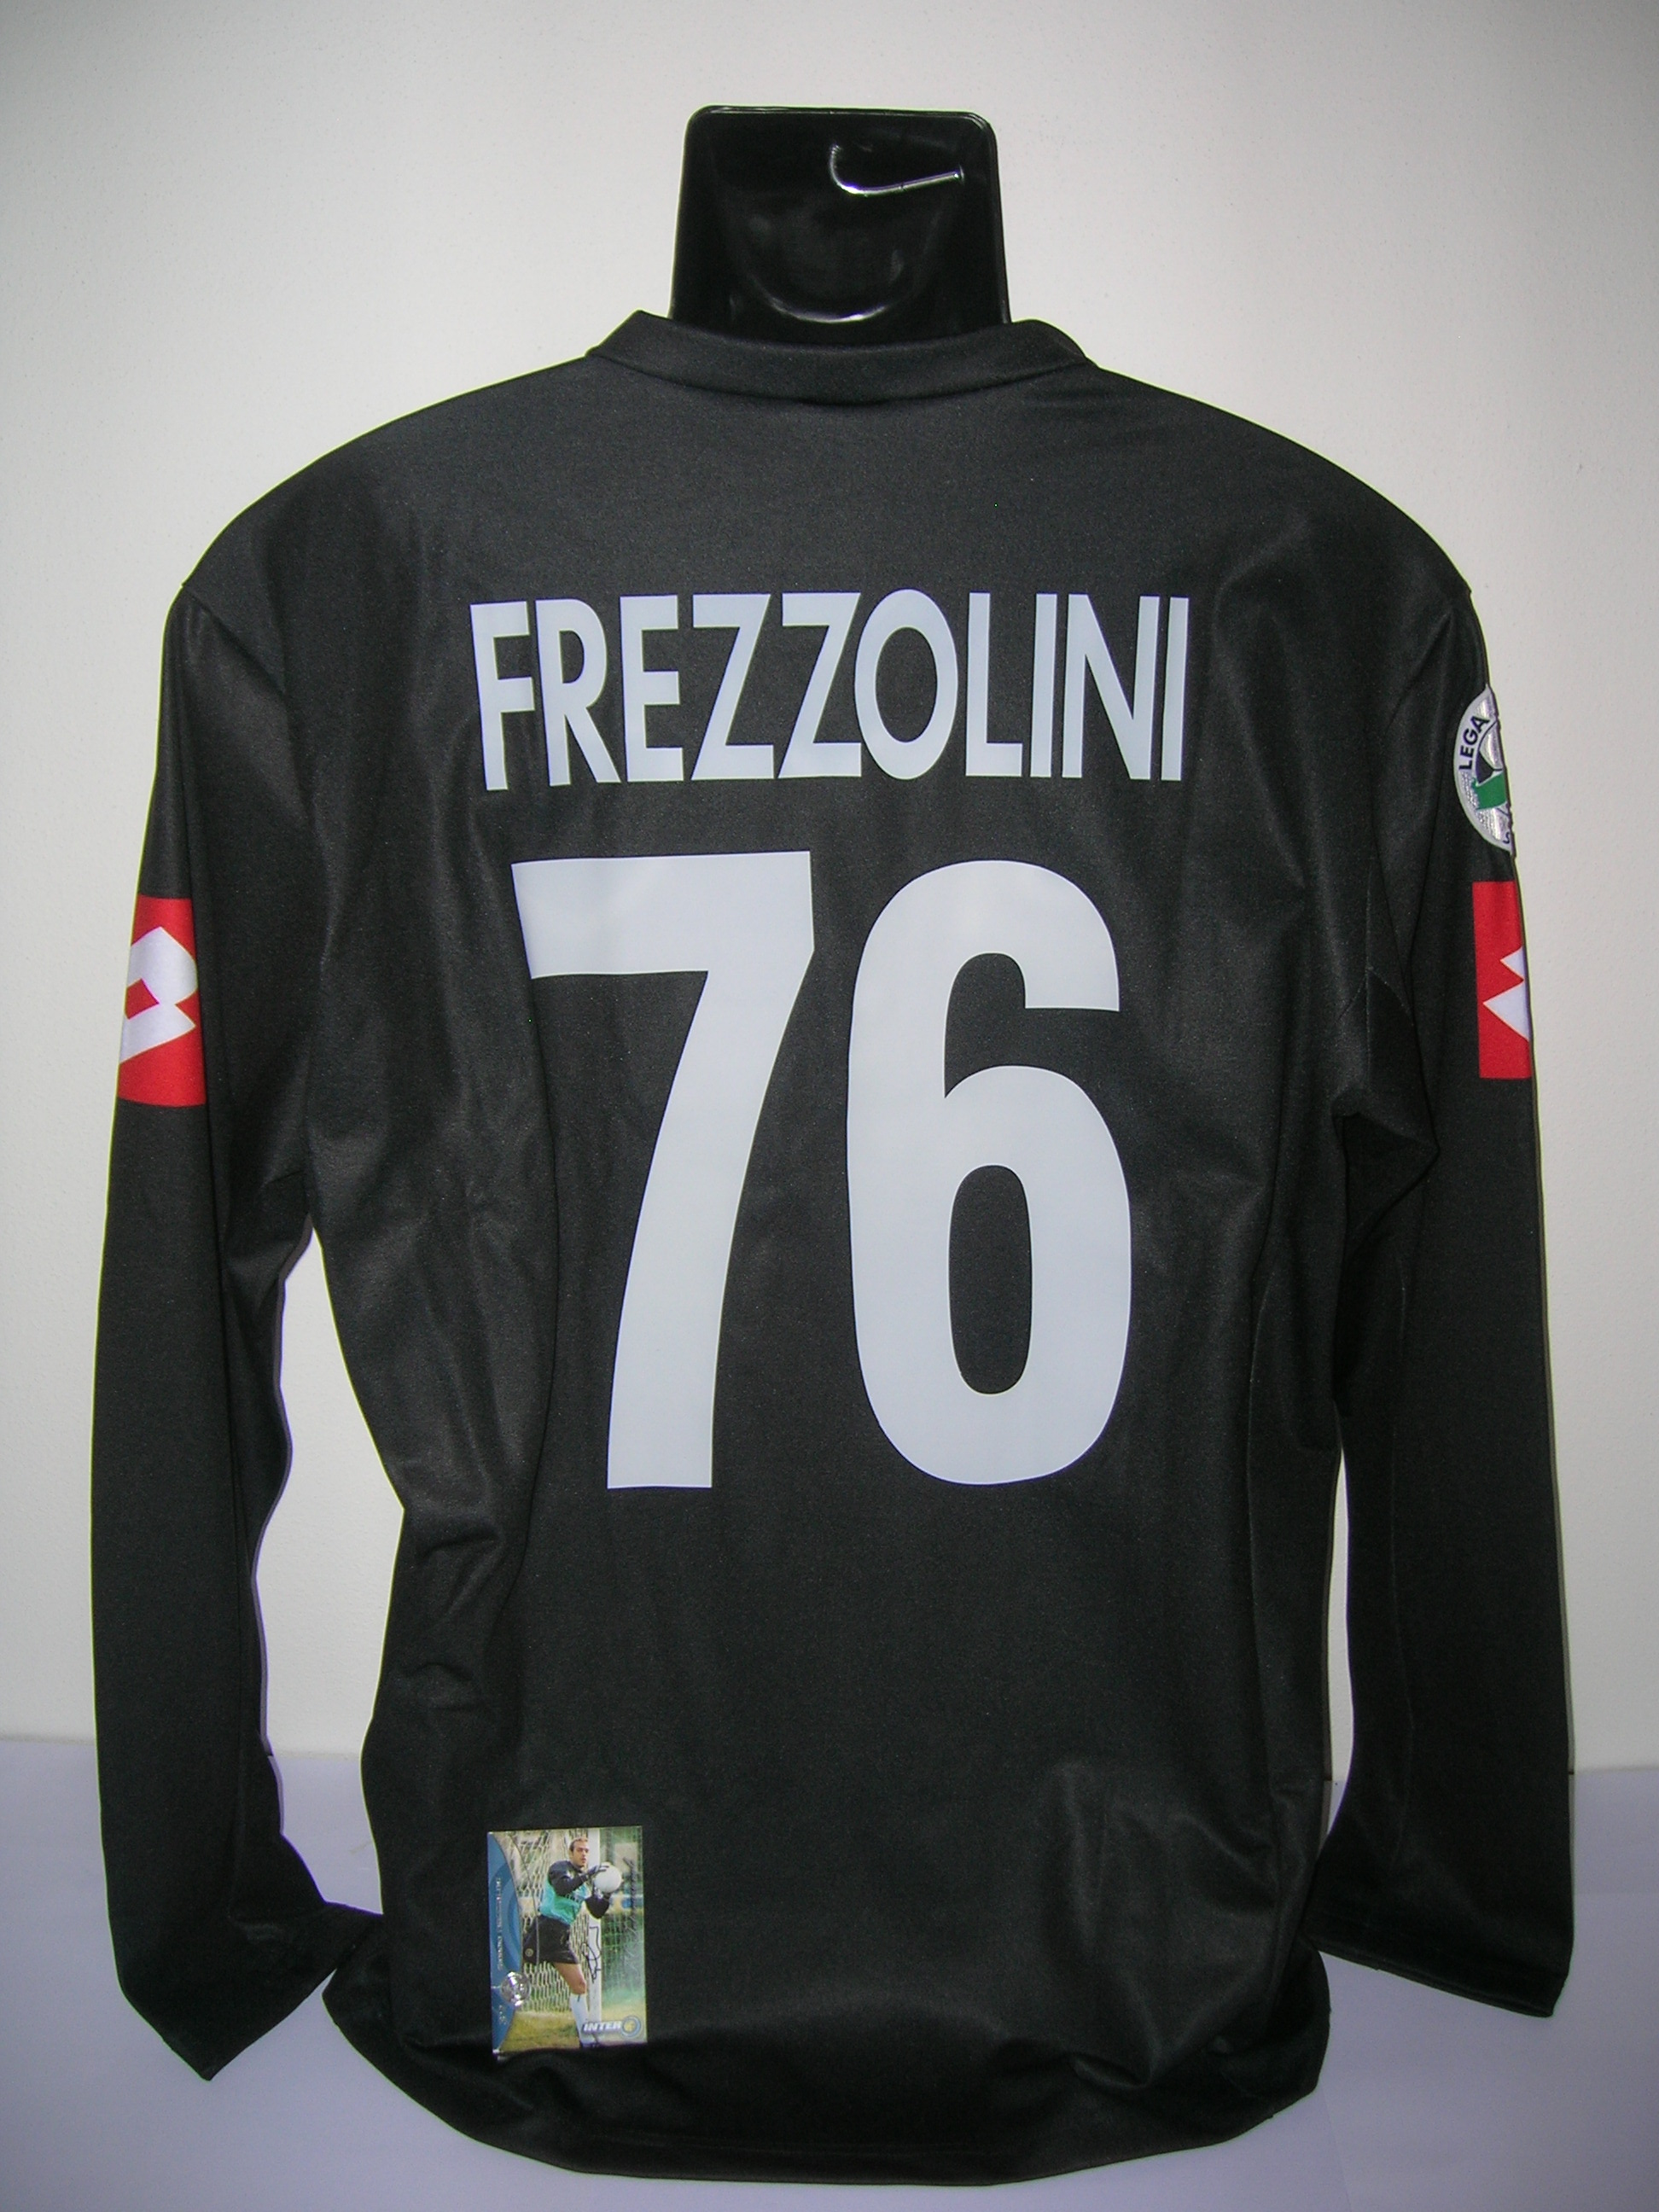 Frezzolini n 76 Chievo Verona B